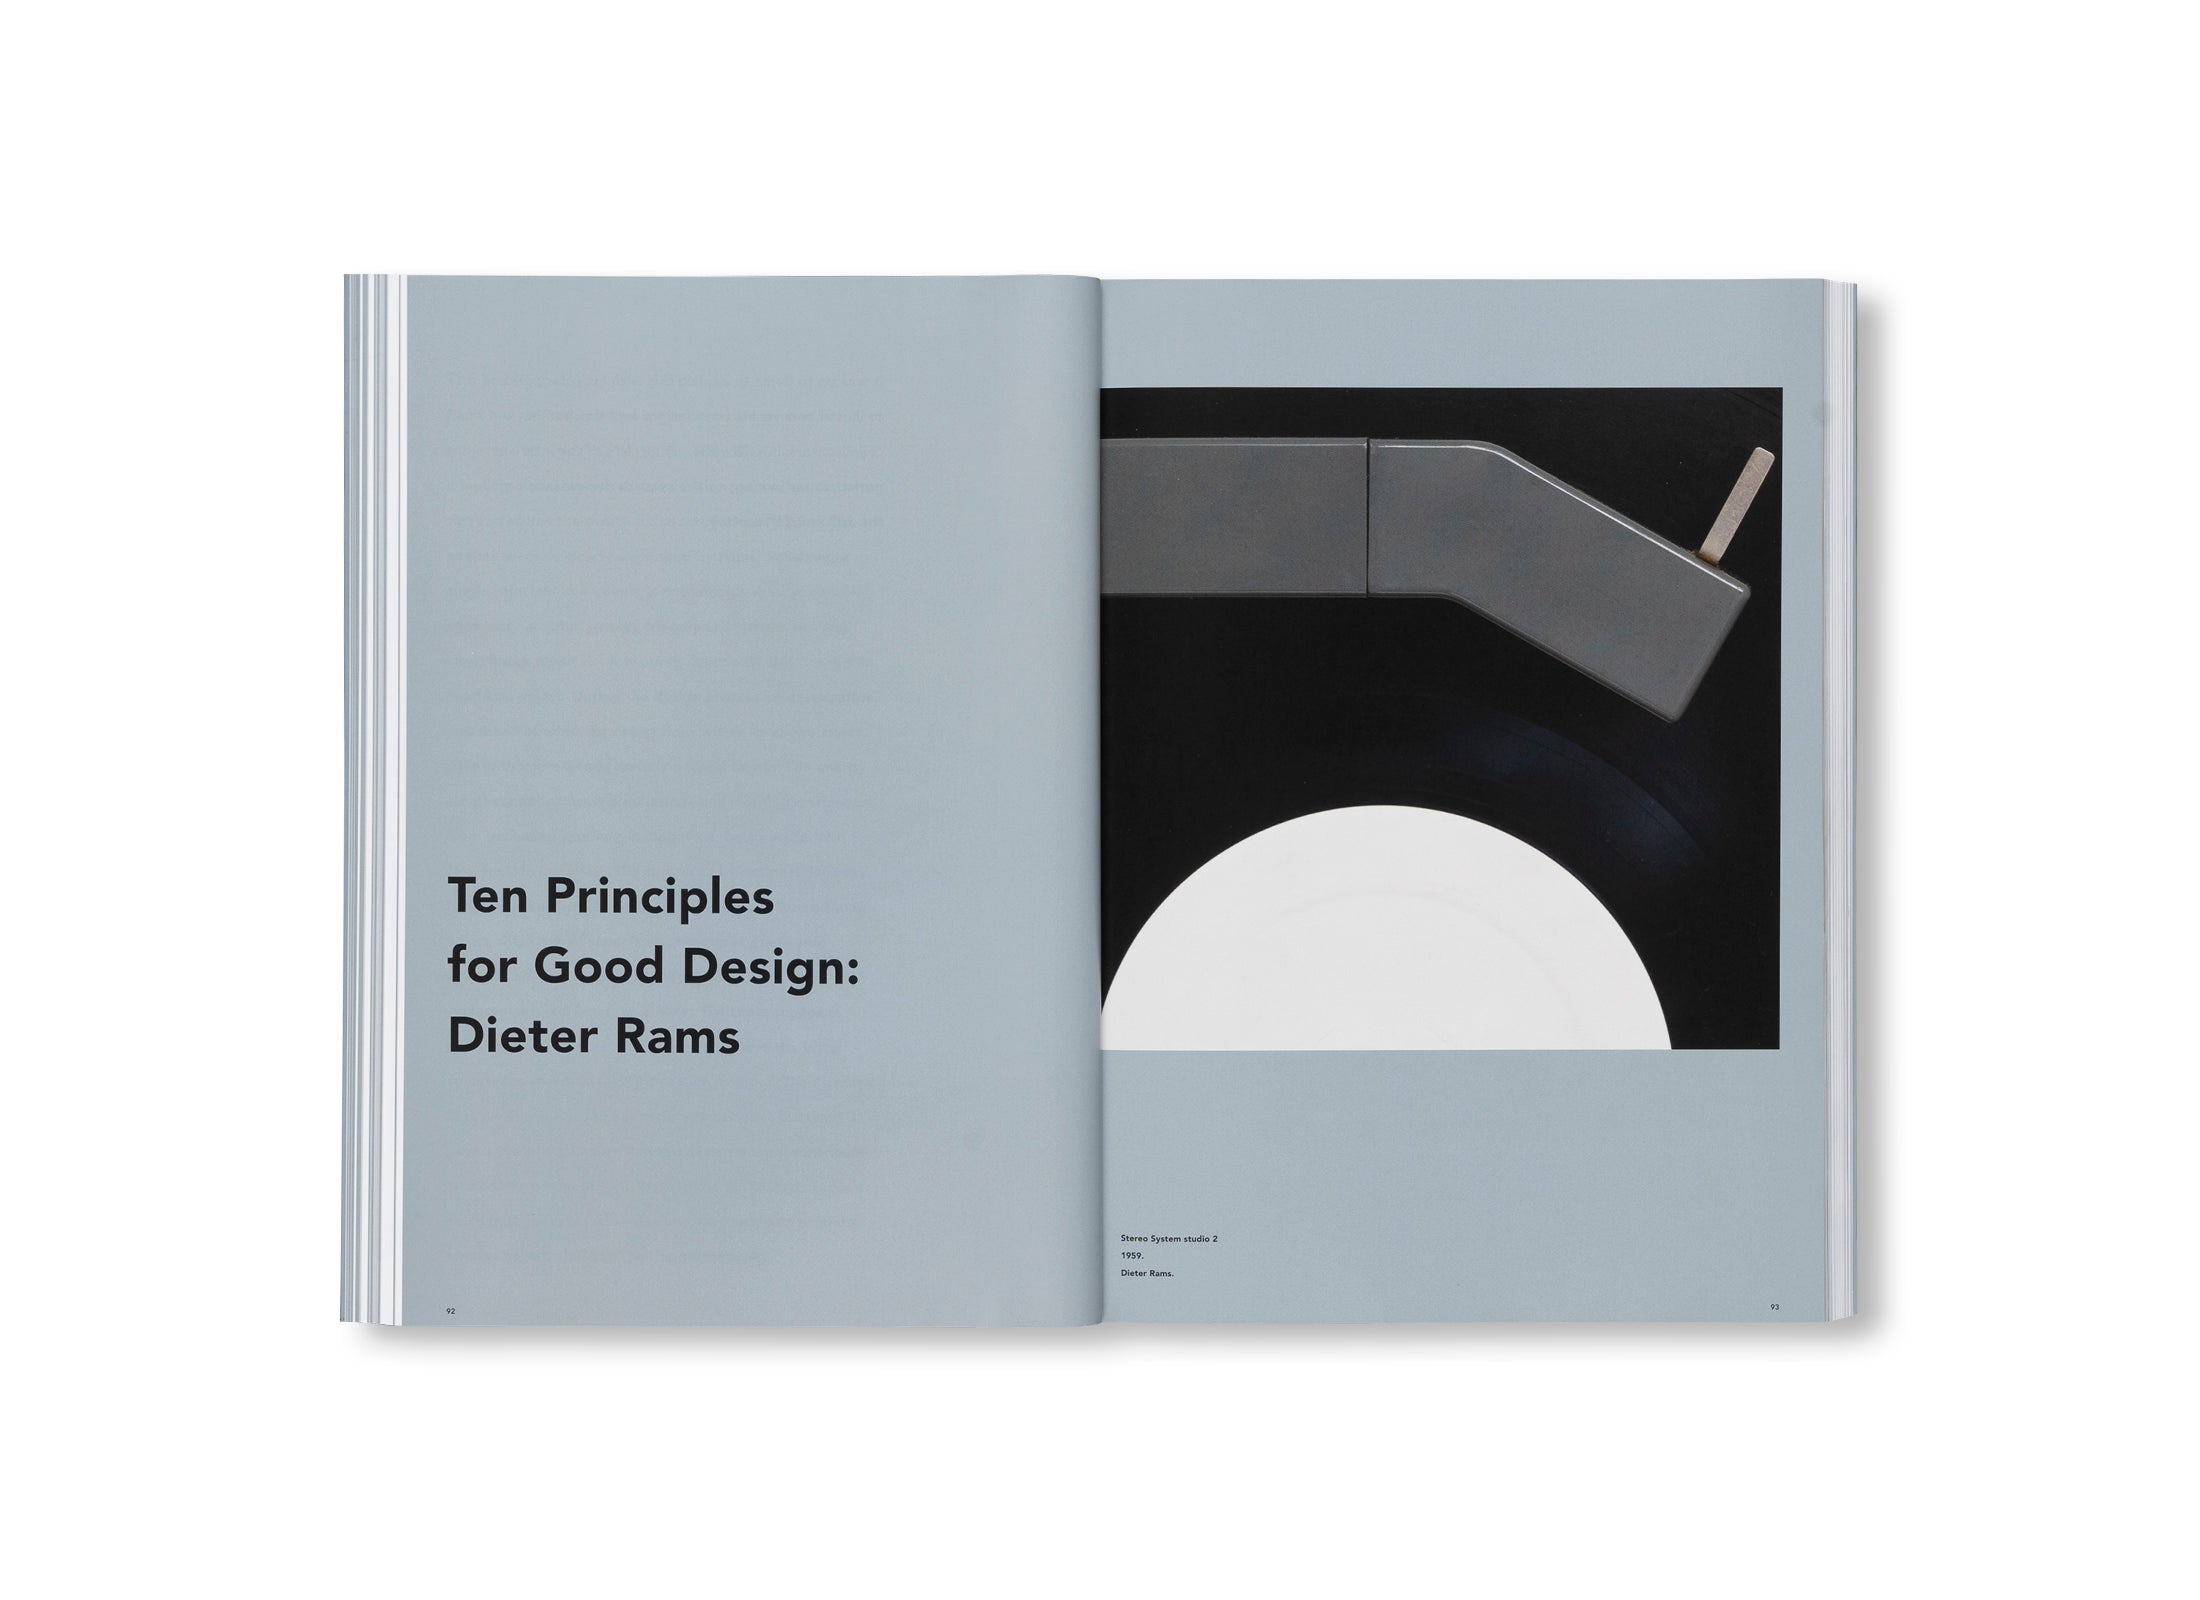 TEN PRINCIPLES FOR GOOD DESIGN by Dieter Rams